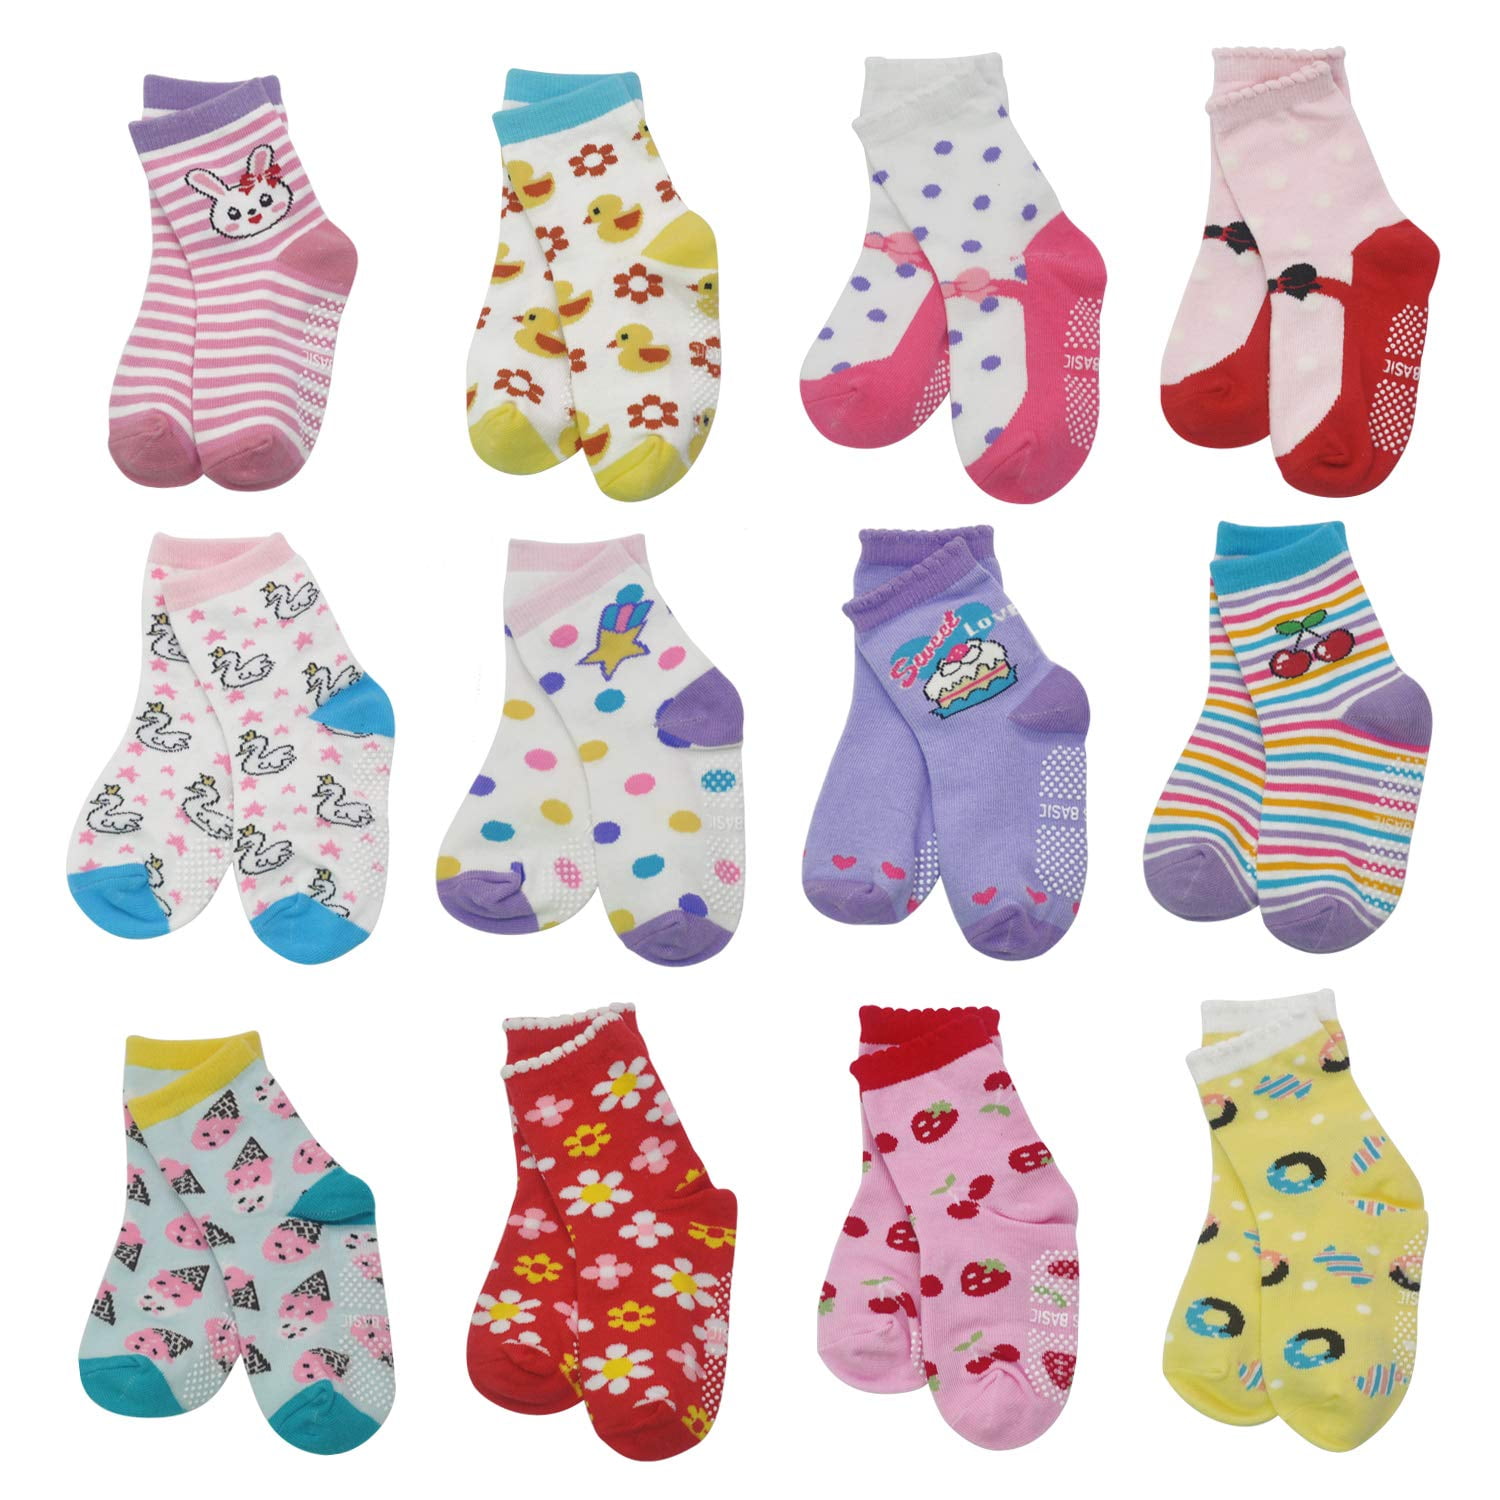 12 Pairs Kids Non Slip Skid Socks Grips Sticky Slippery Cotton Crew Socks For 1-3/3-5/5-7 Years Old Children Youth Boy Girl 